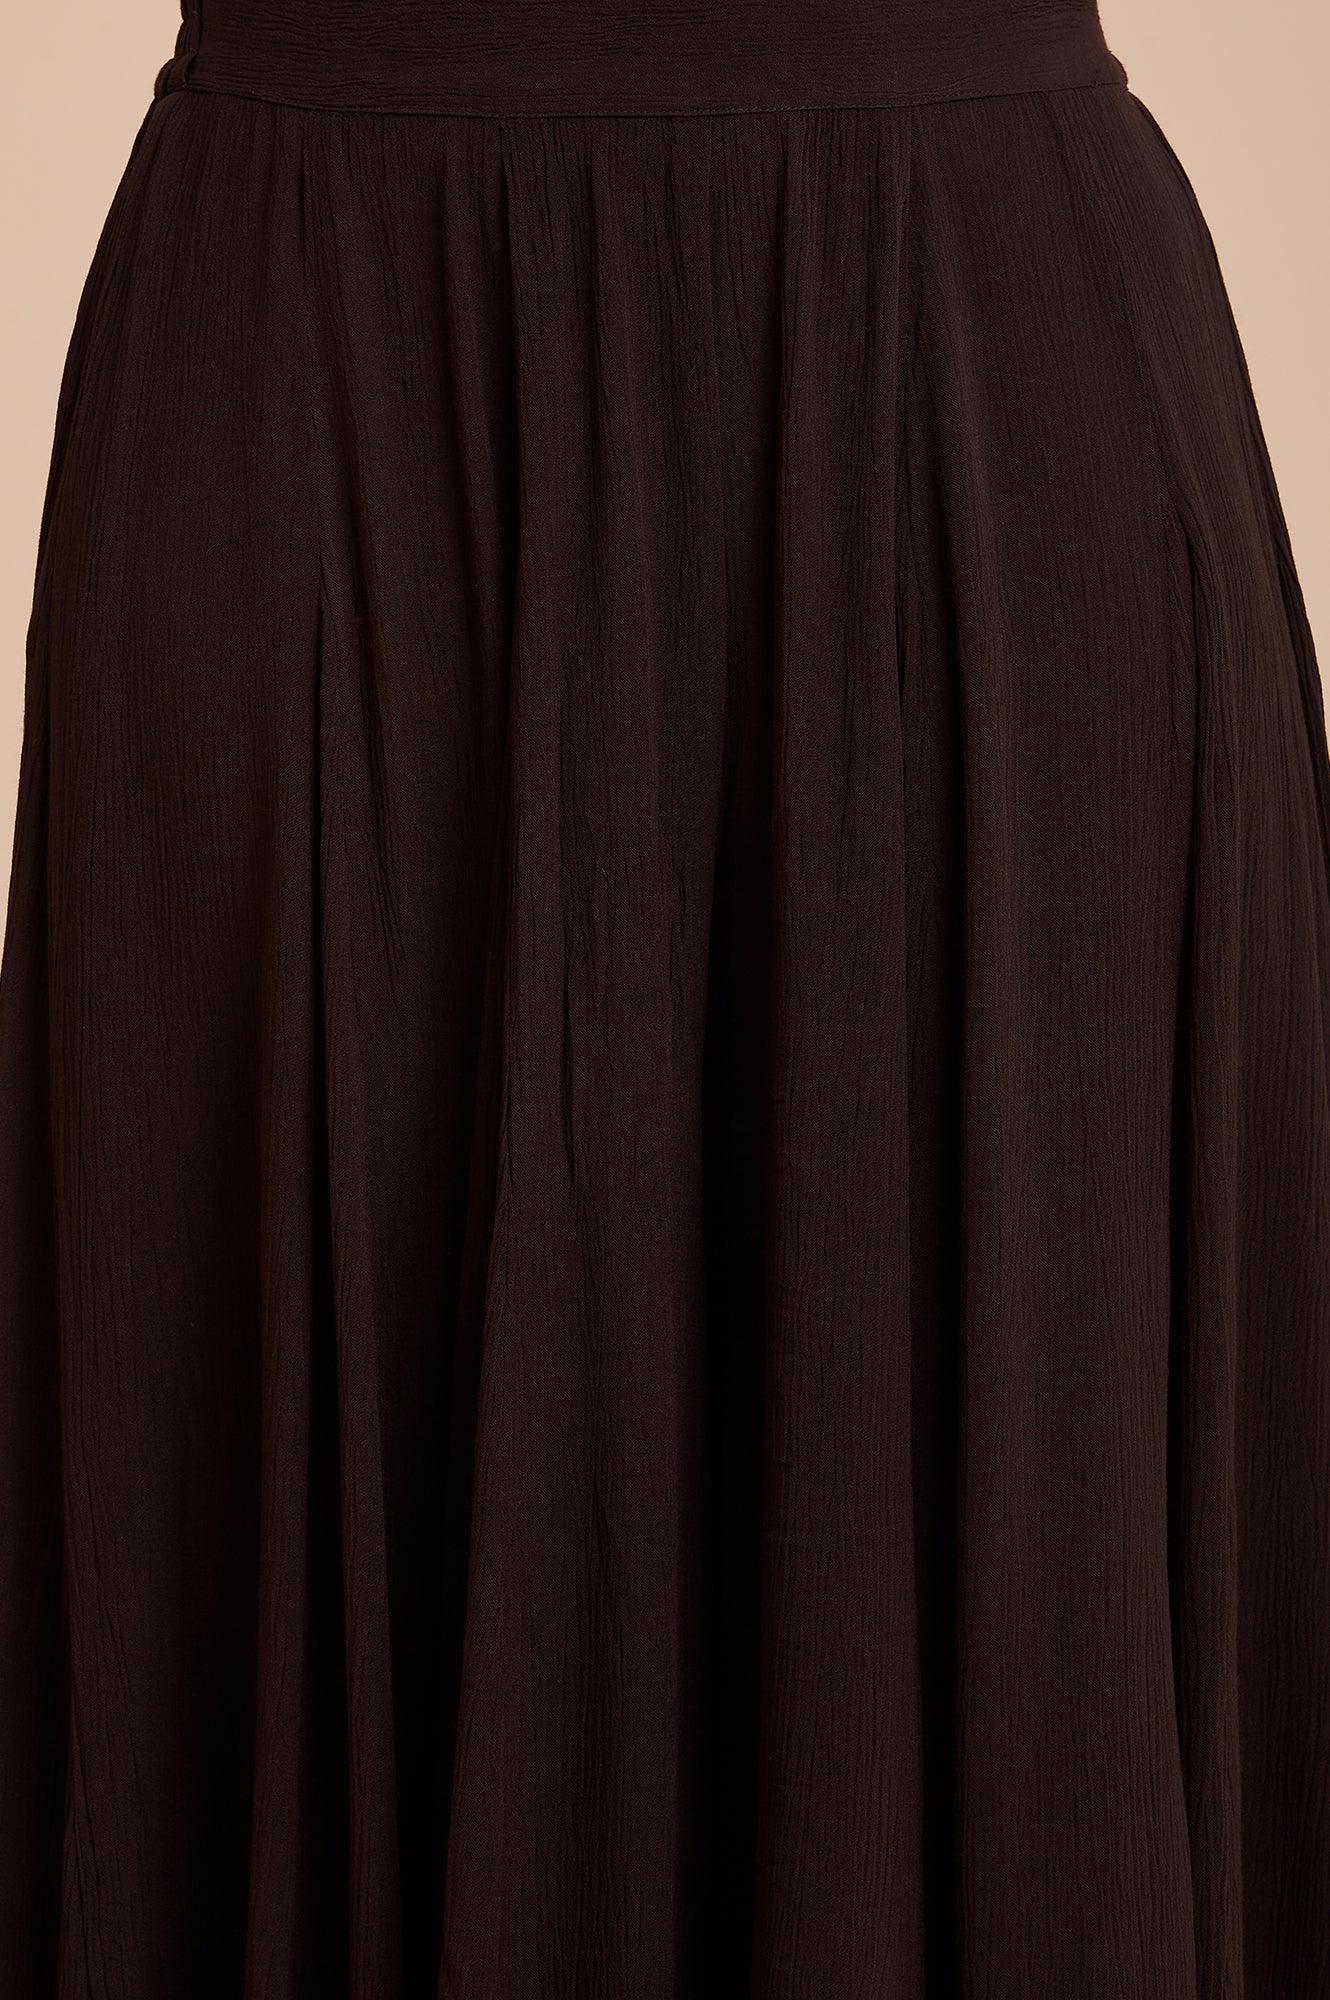 Dark Brown Crinkled Divided Skirt - wforwoman